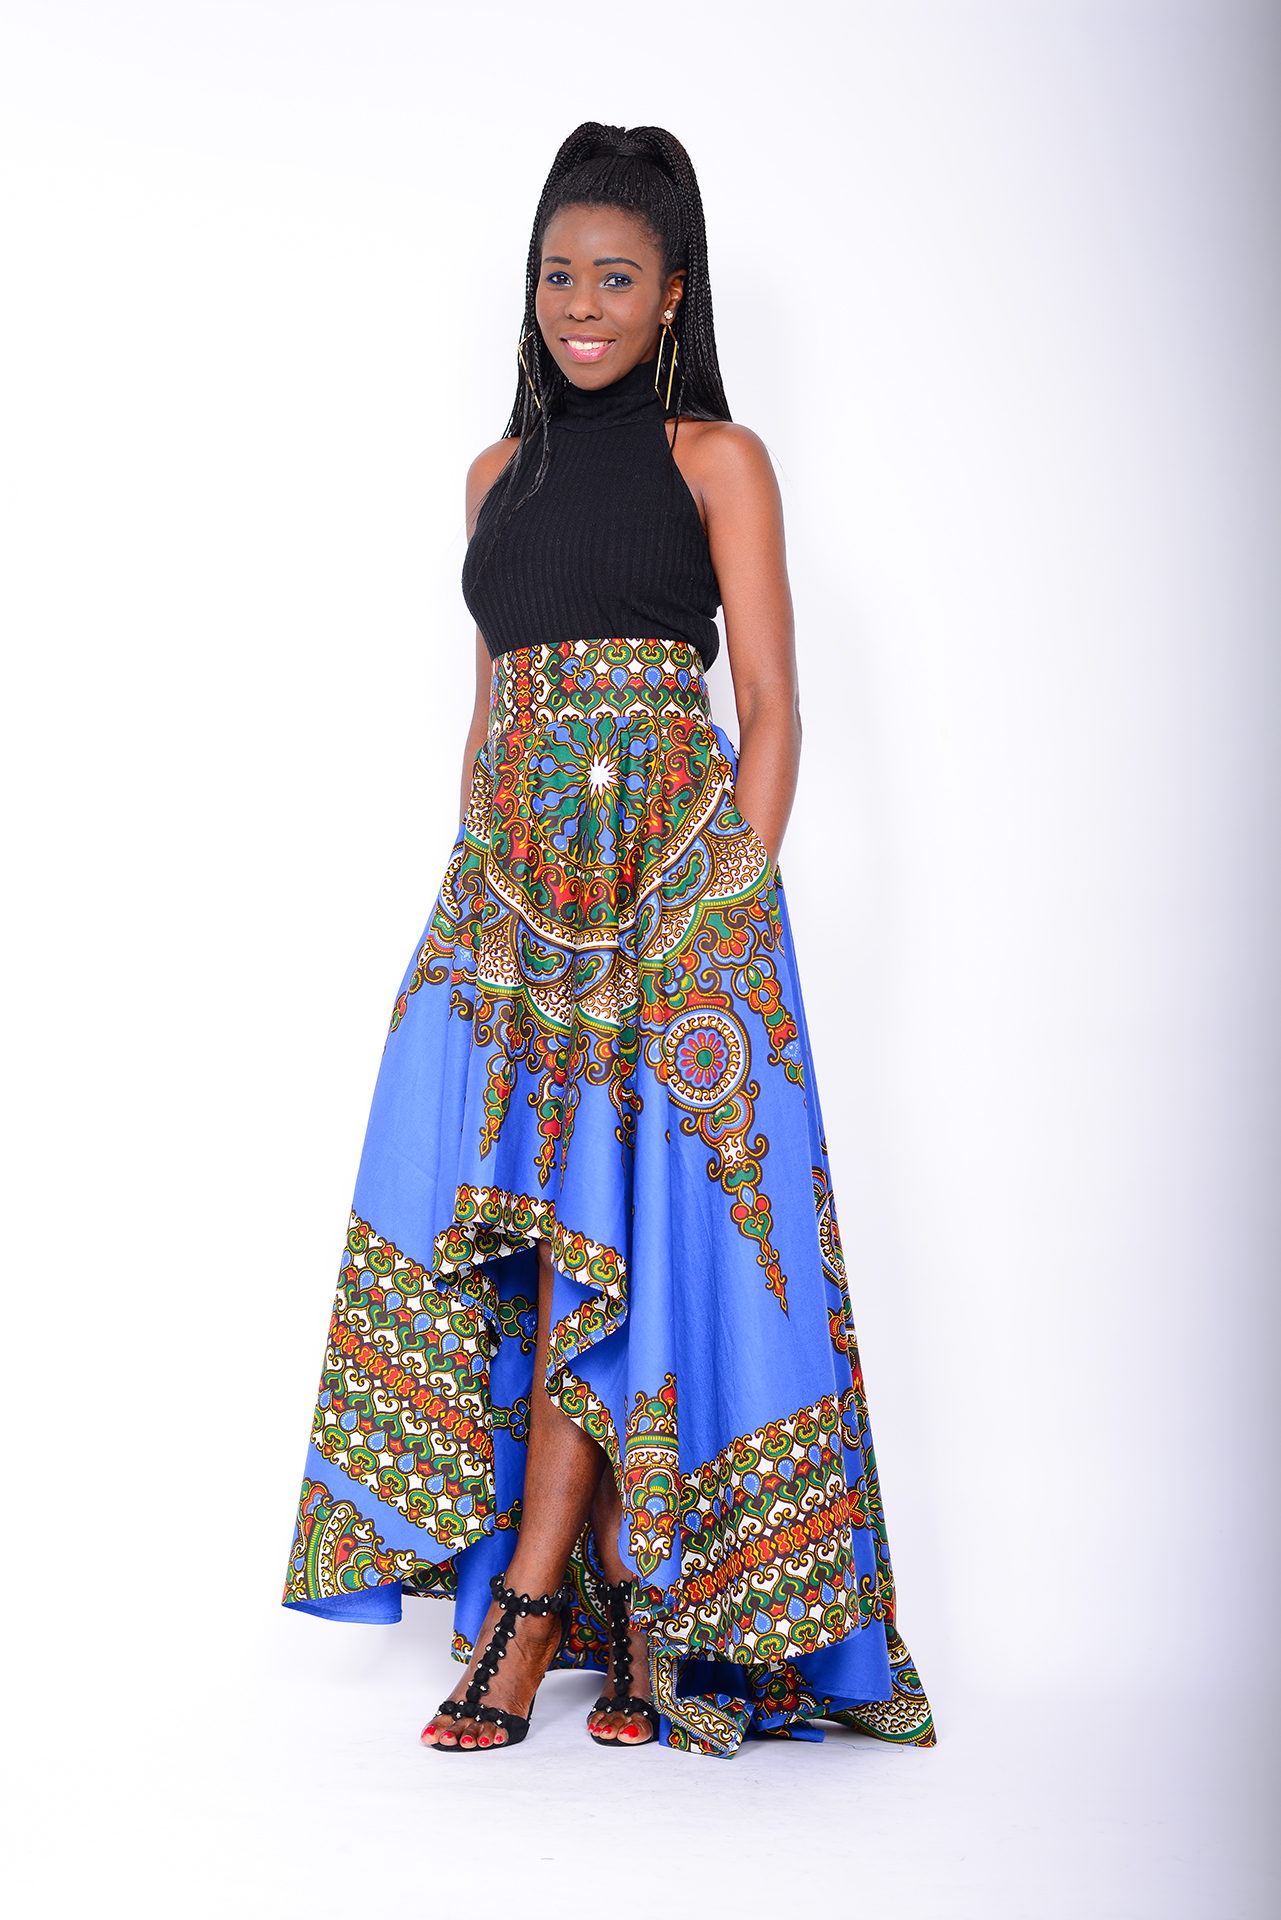 Afrikanische Mode - Euge-W Kollektion 2021 - der Frühling darf kommen!